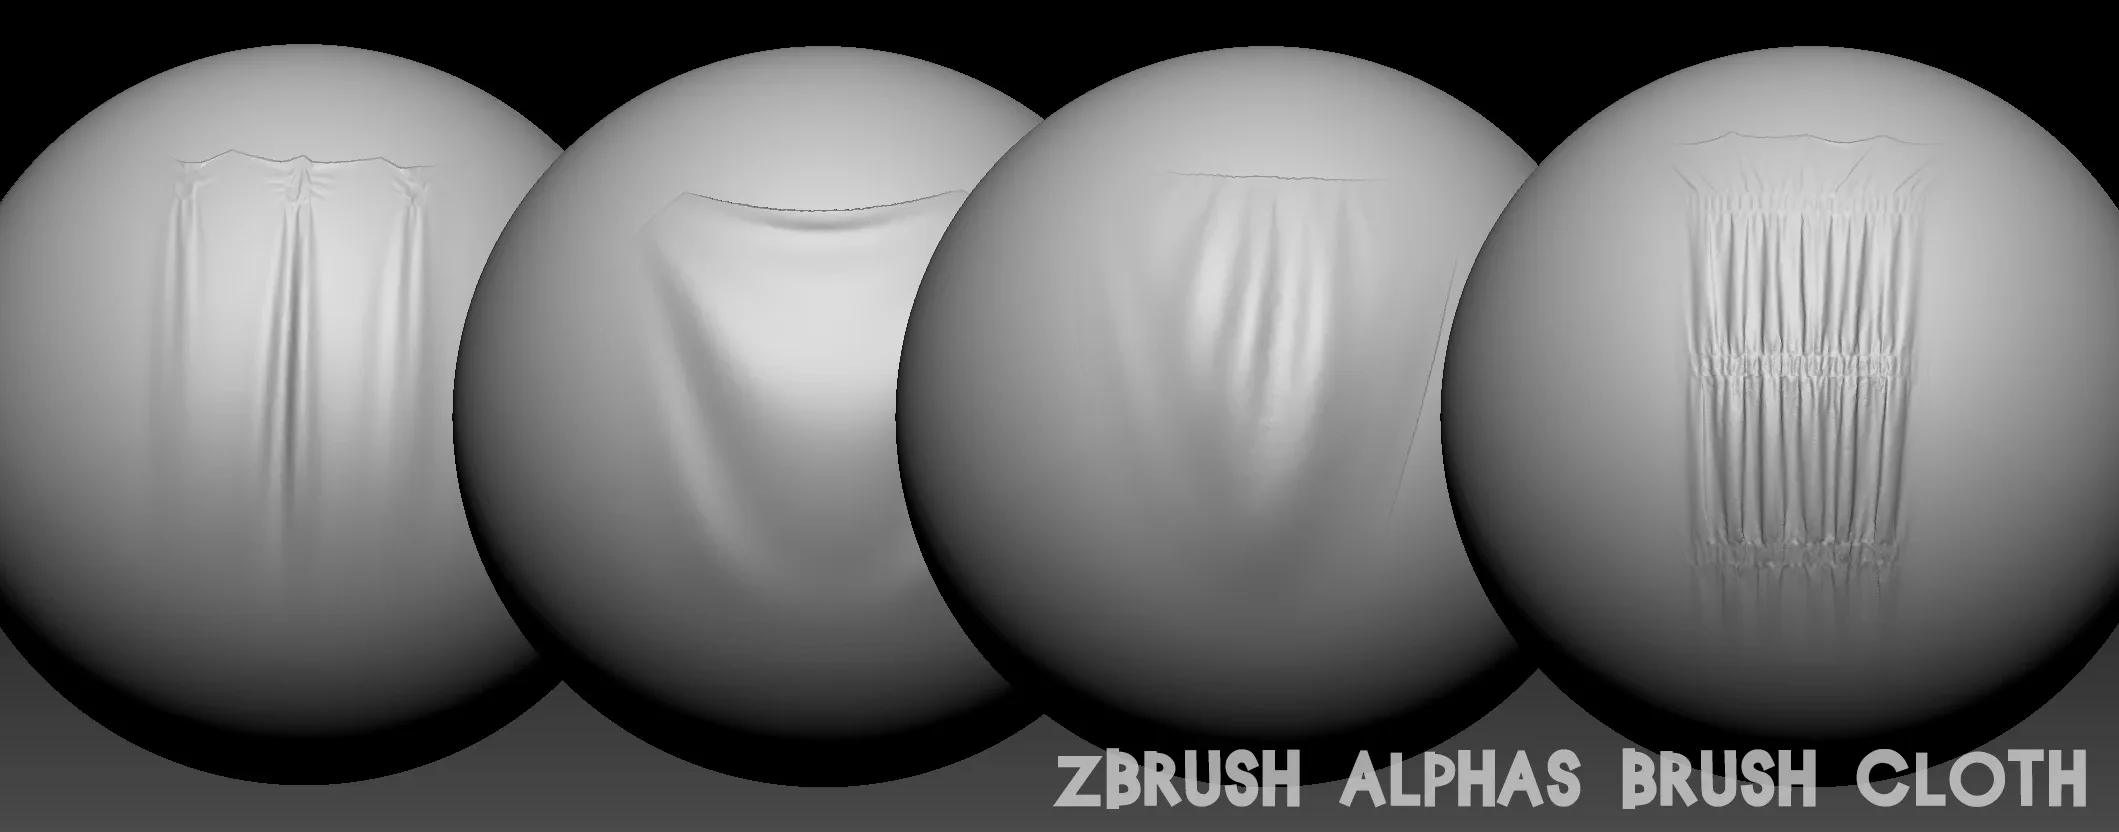 36 Zbrush Alphas Brush Cloth